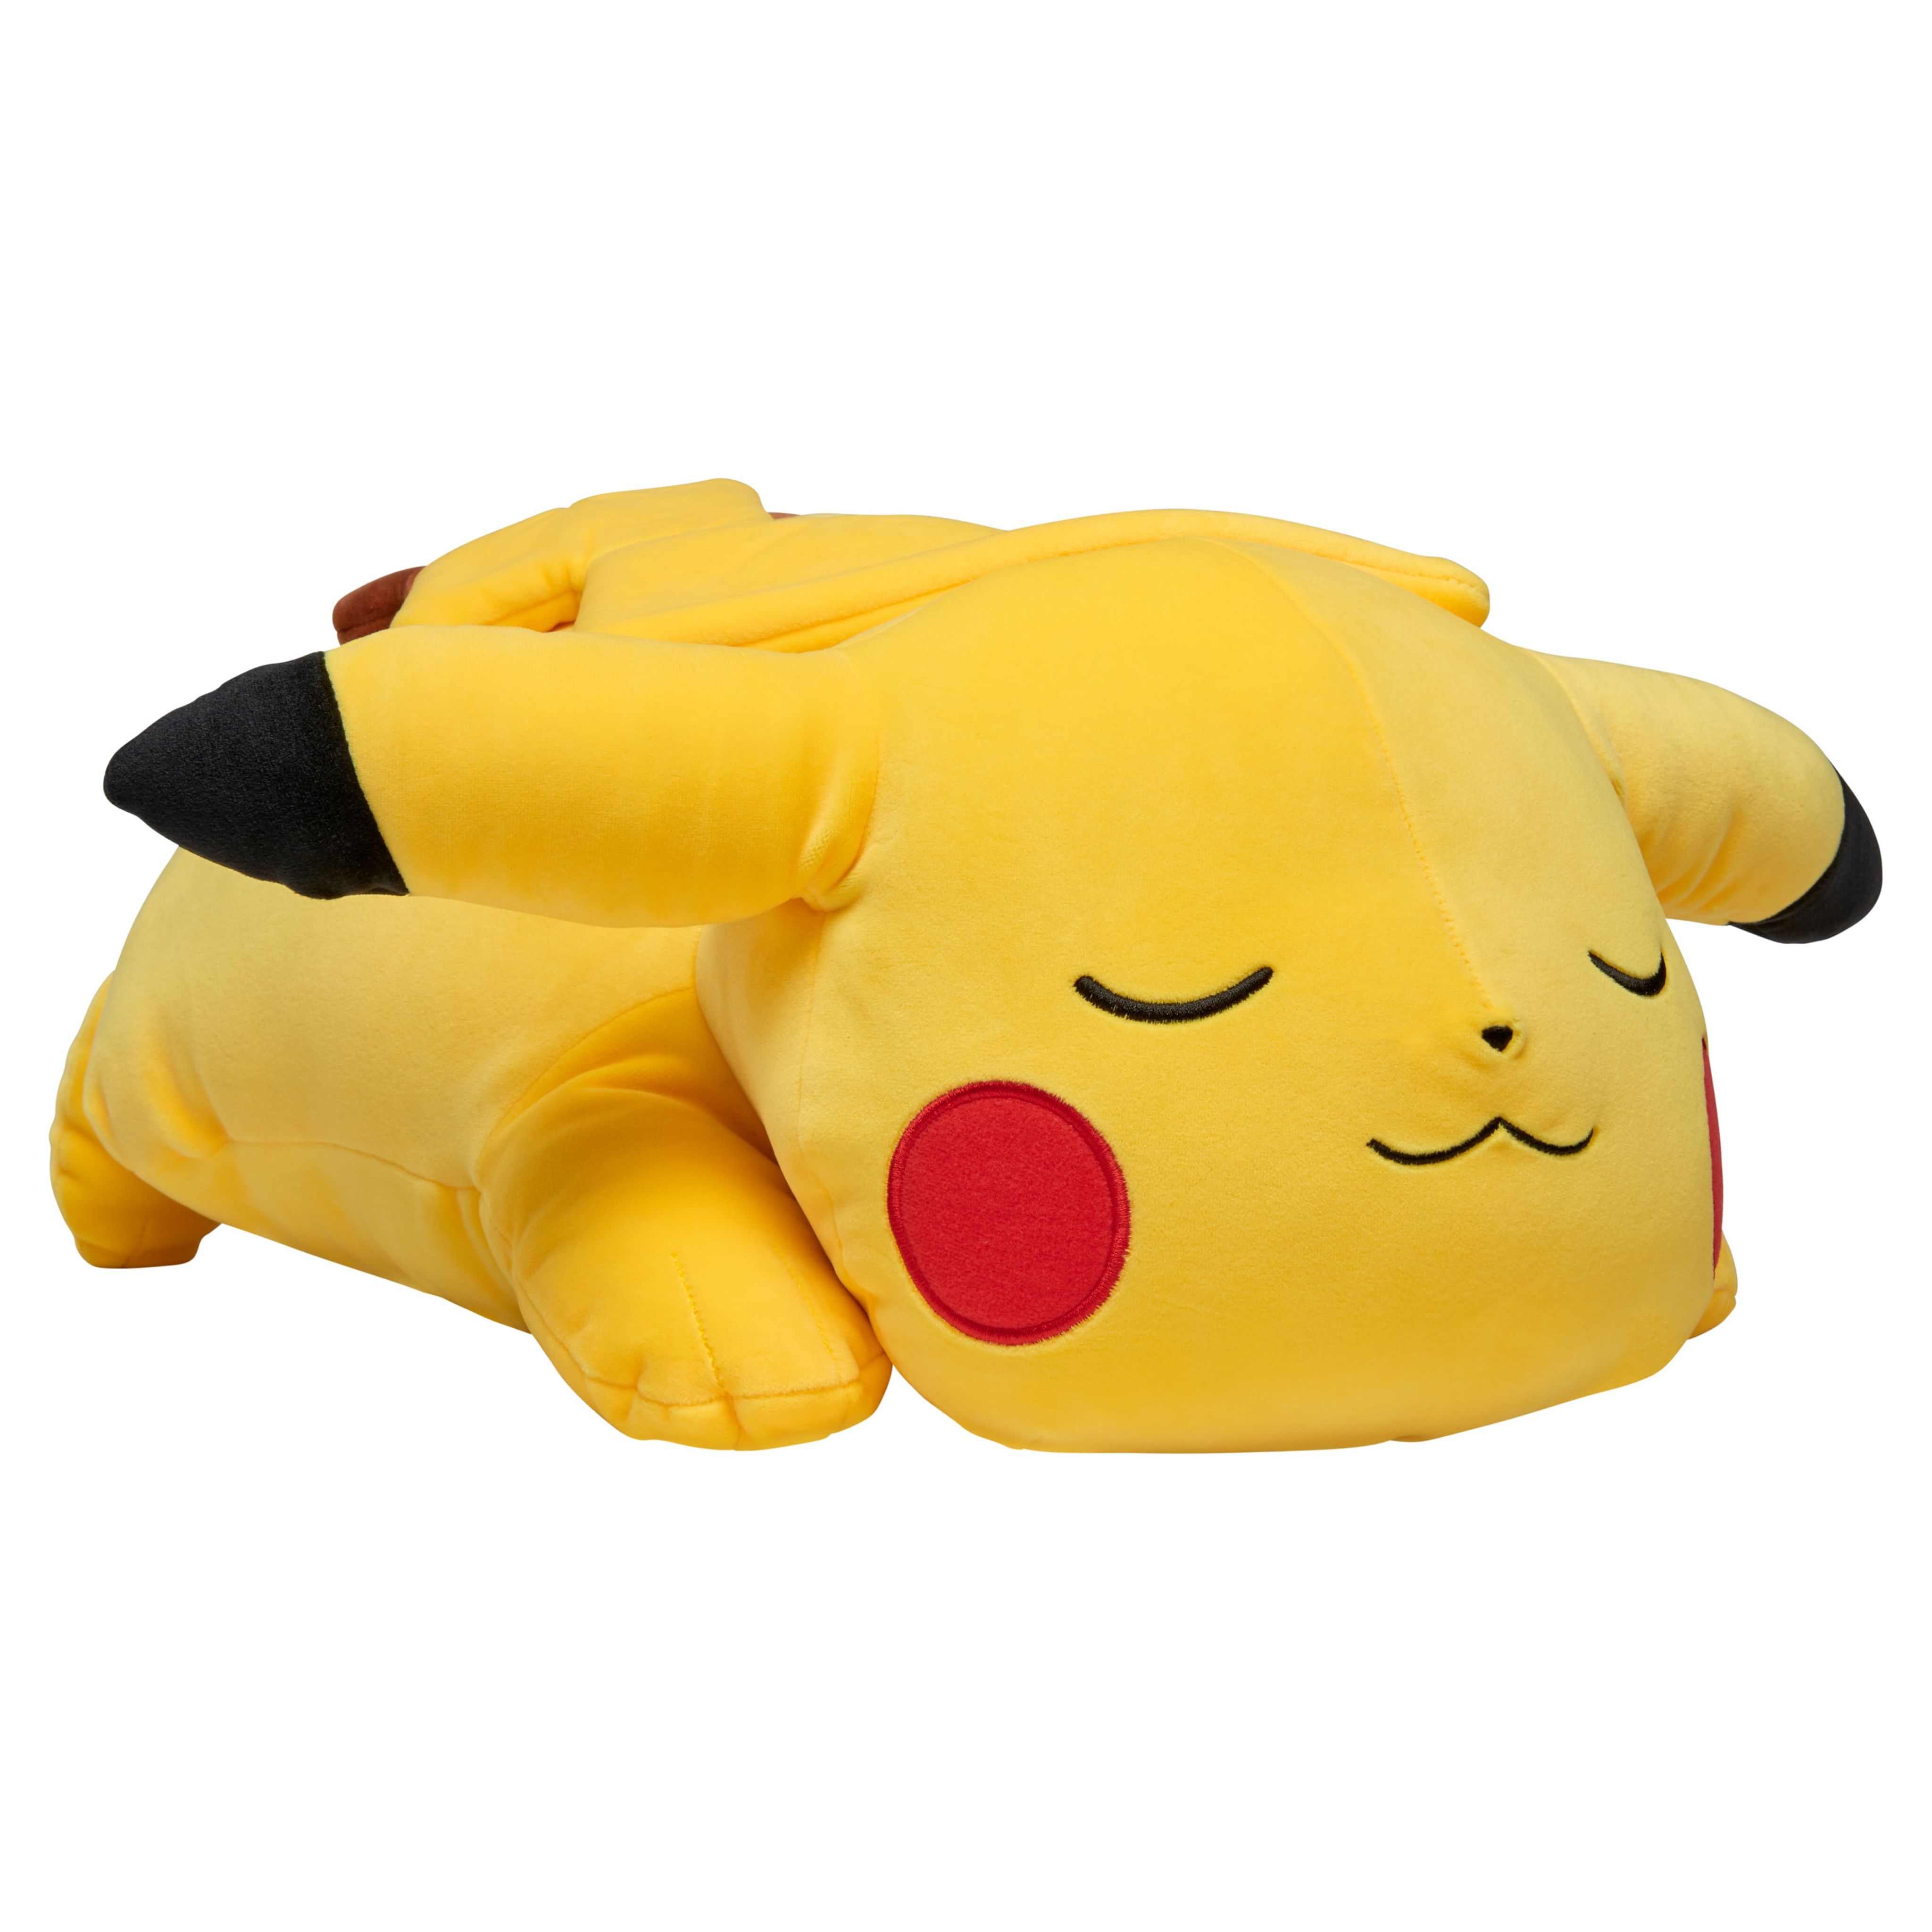 Pokemon 18" Sleeping Pikachu Premium Plush - image 2 of 4